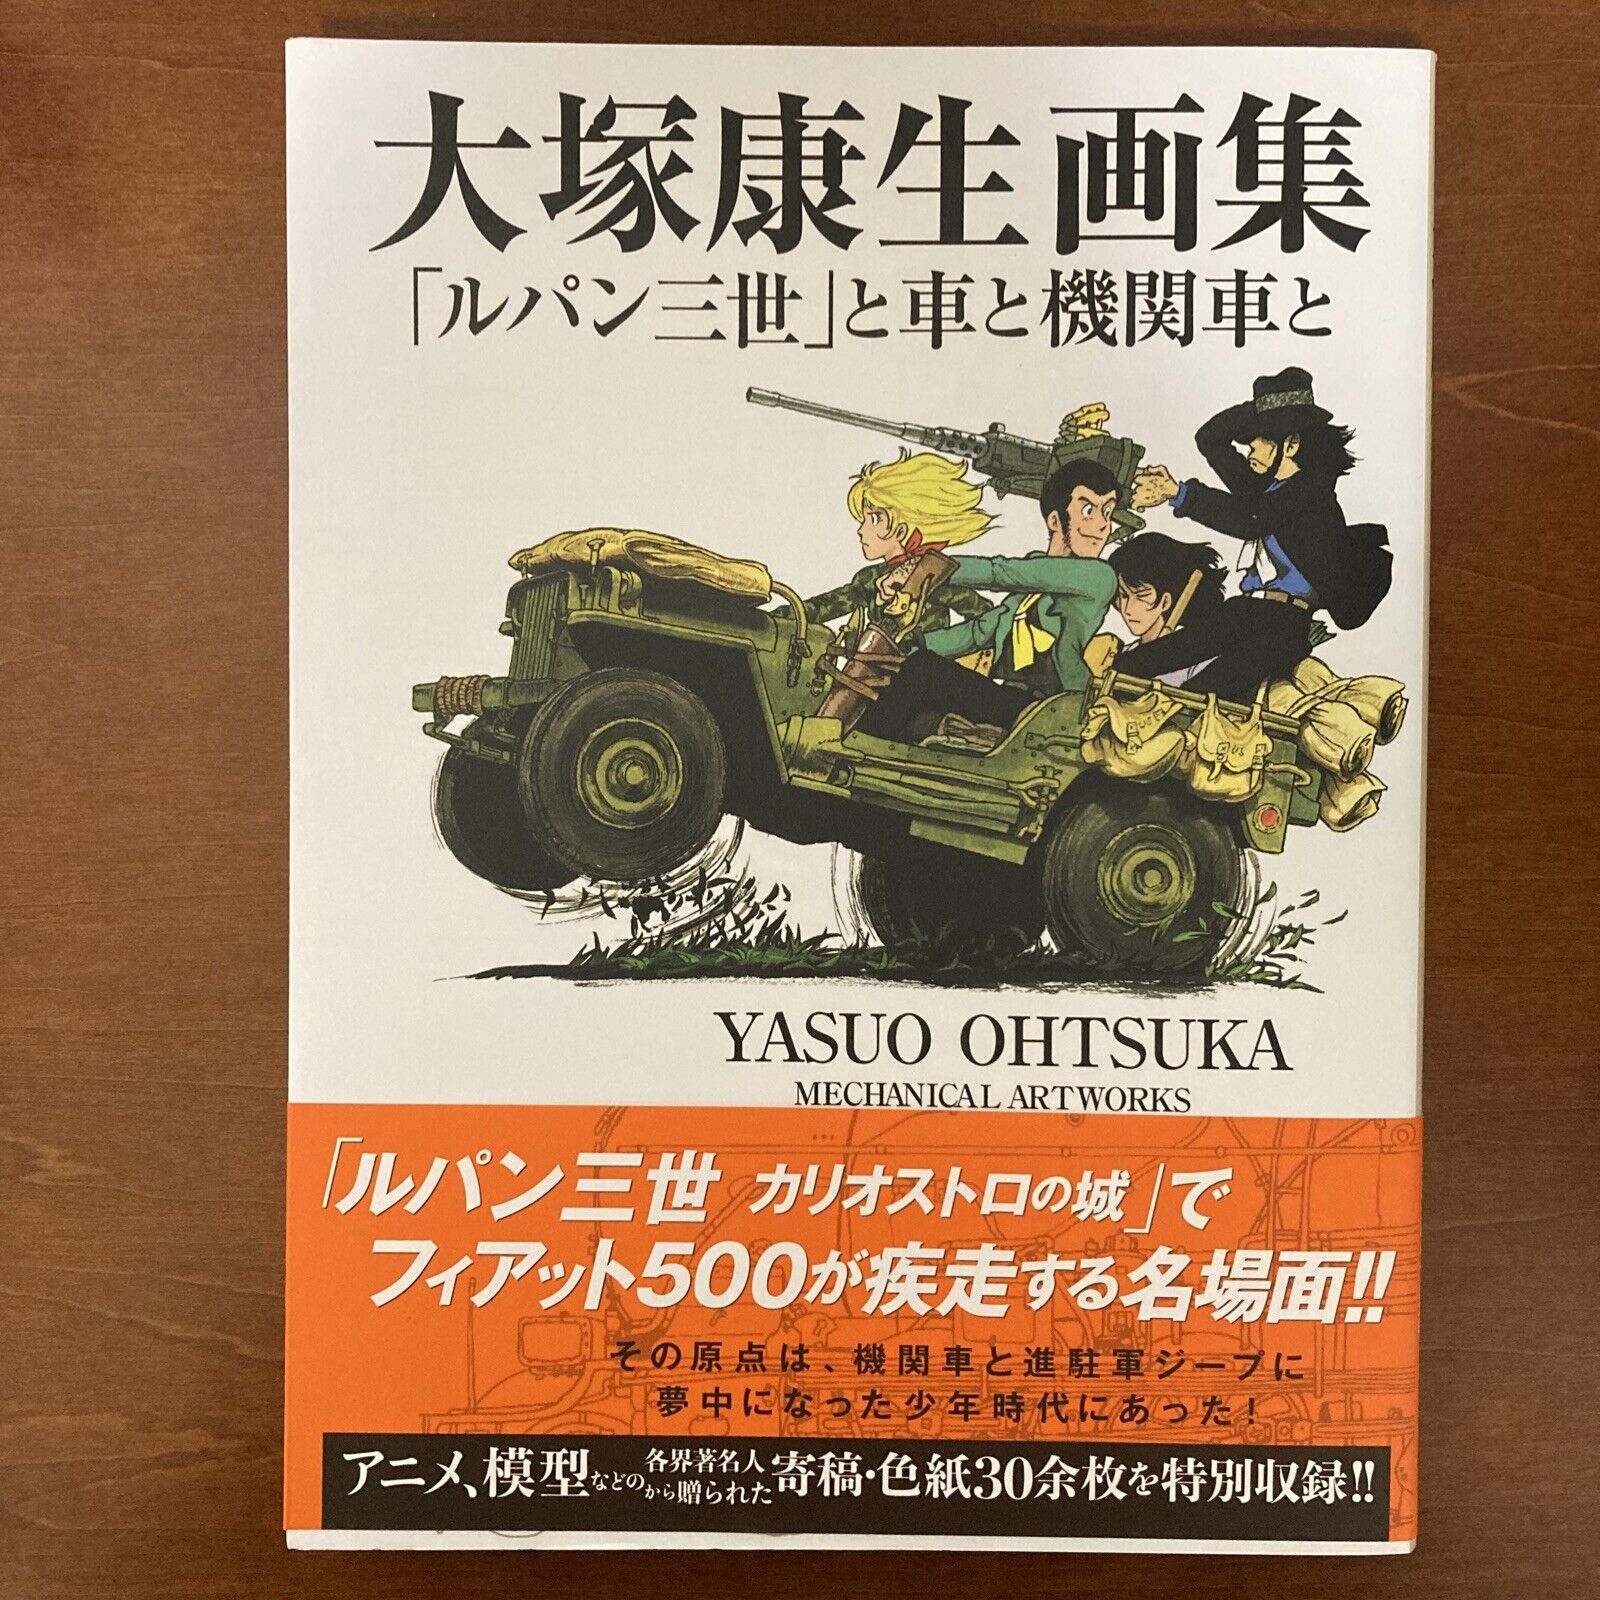 Yasuo Ohtsuka Mechanical Art Works Lupin The Third III Anime Manga Book